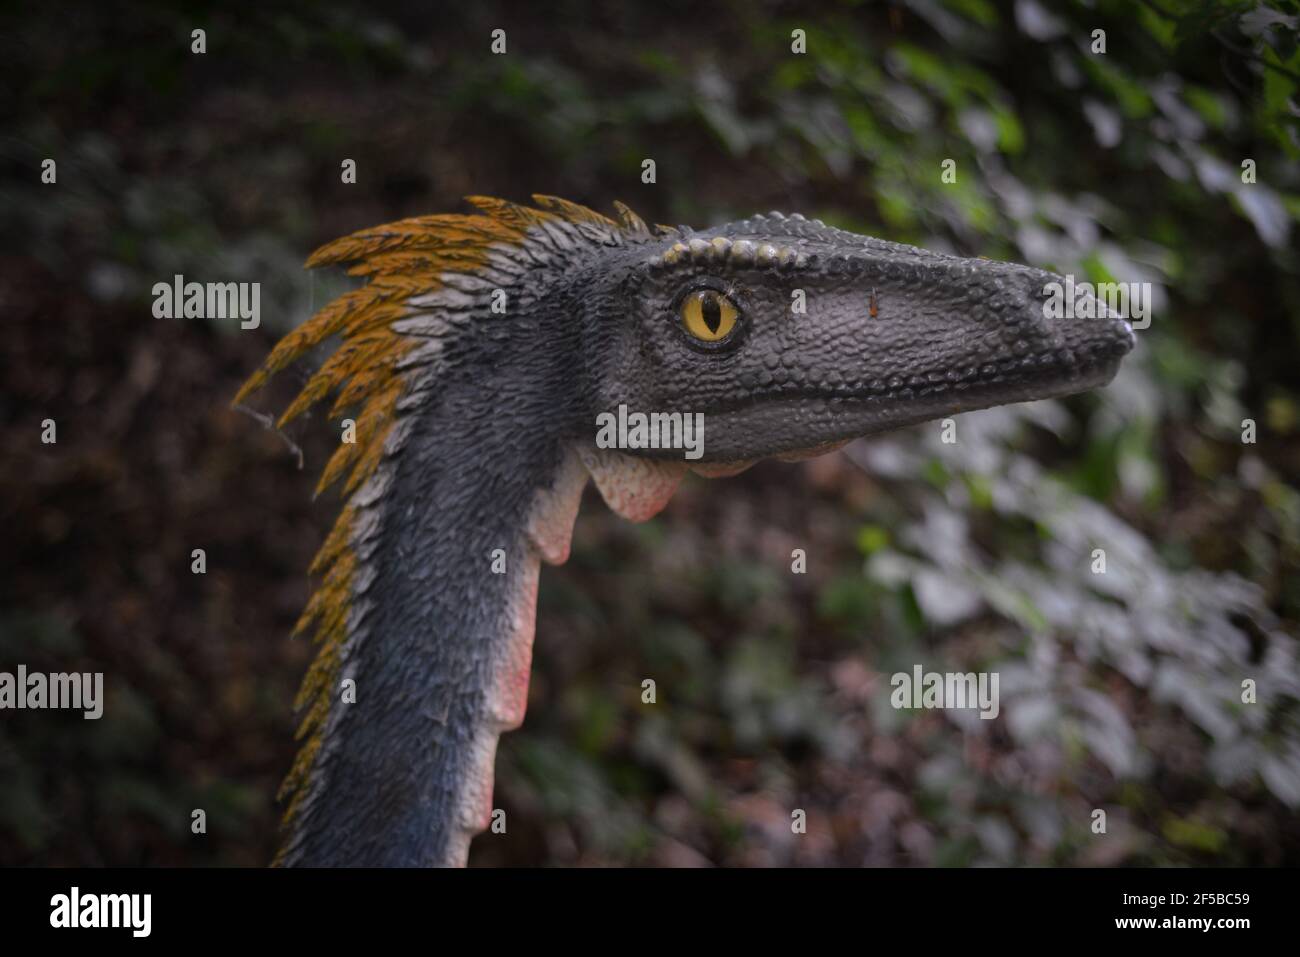 Eye to eye with dinosaurs: Lifesize model of Coelophysis. Stock Photo